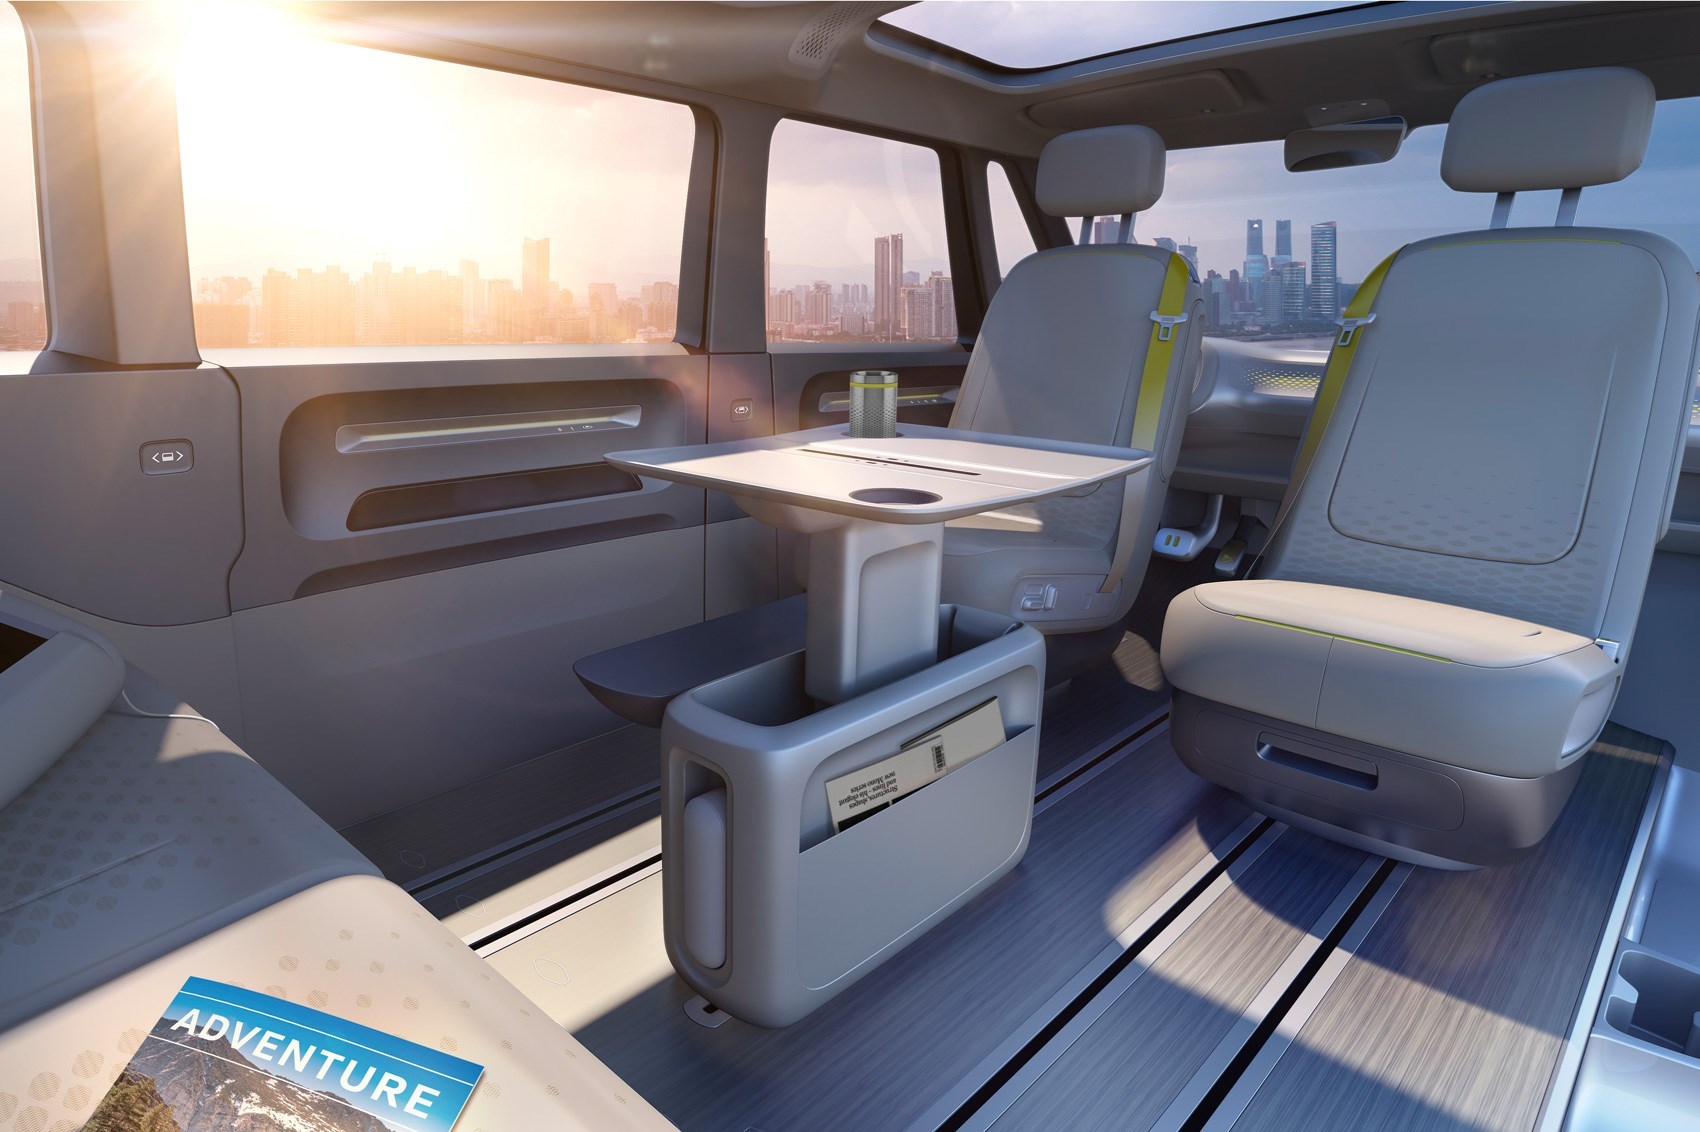 VW Microbus due in 2022 as electric minivan